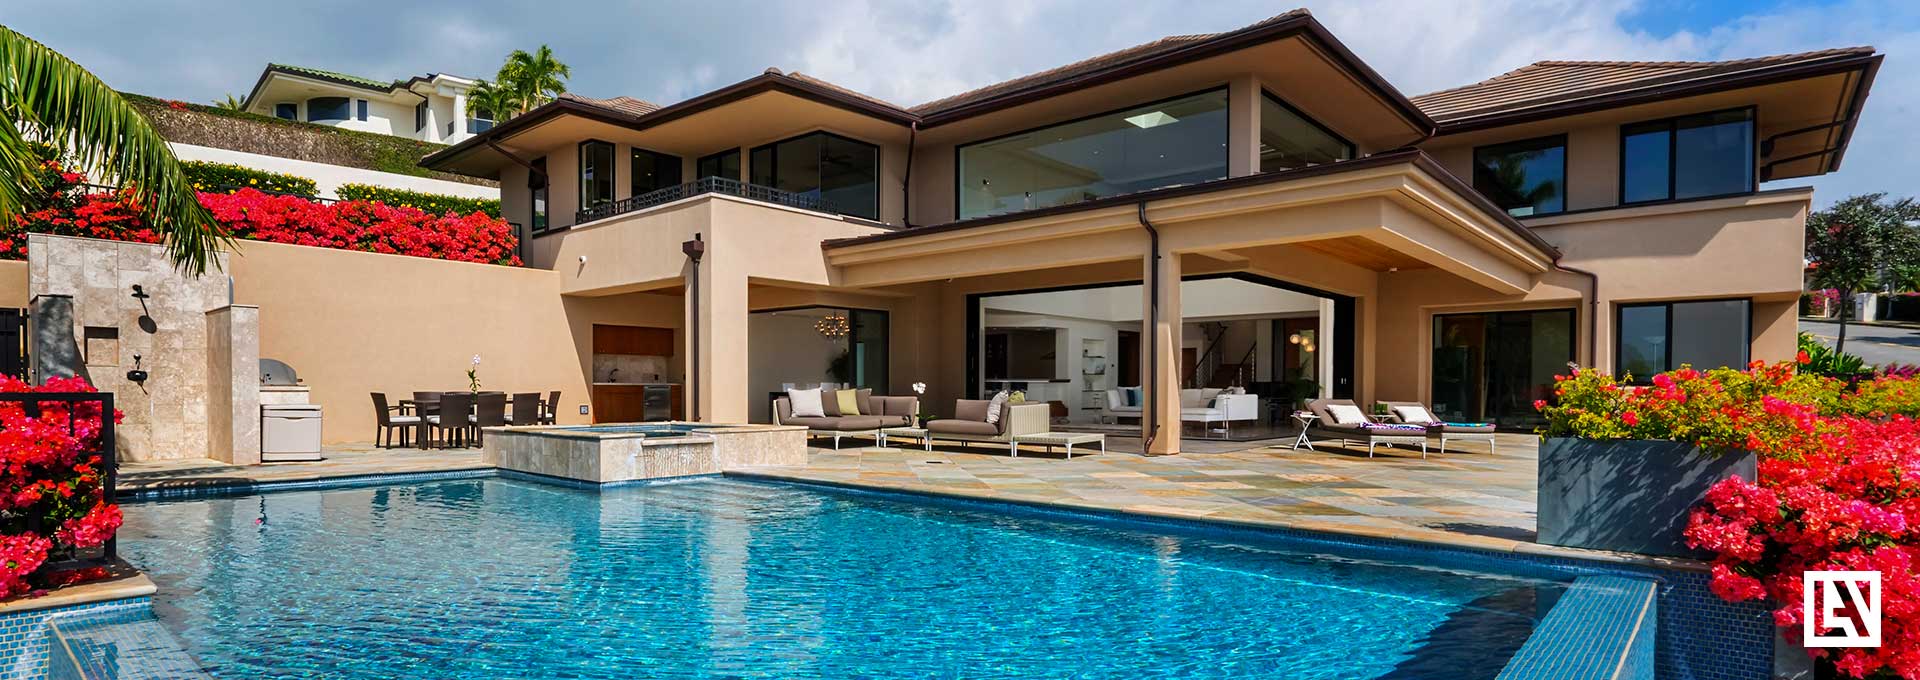 Hawaii Loa Ridge Residence Luxury Home created by Longhouse Design+Build